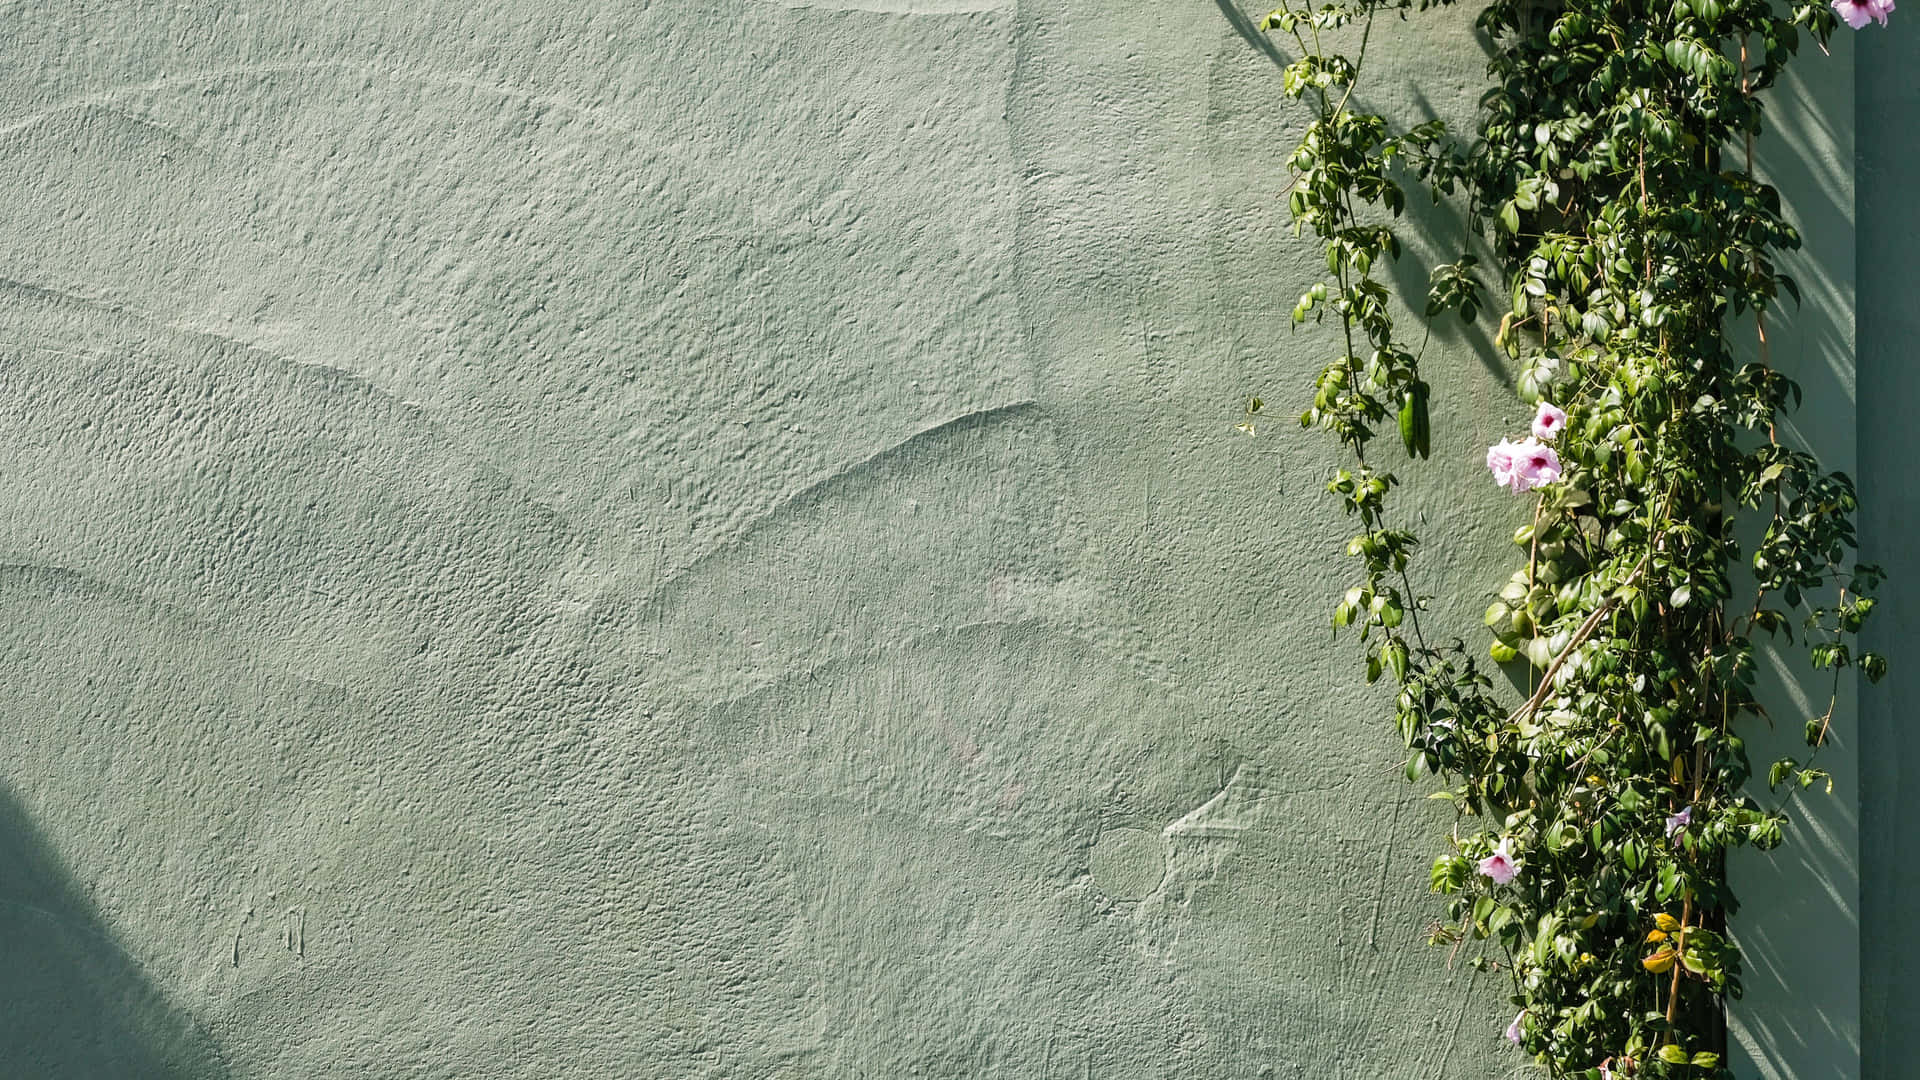 Climbing Flowerson Concrete Wall4 K Wallpaper